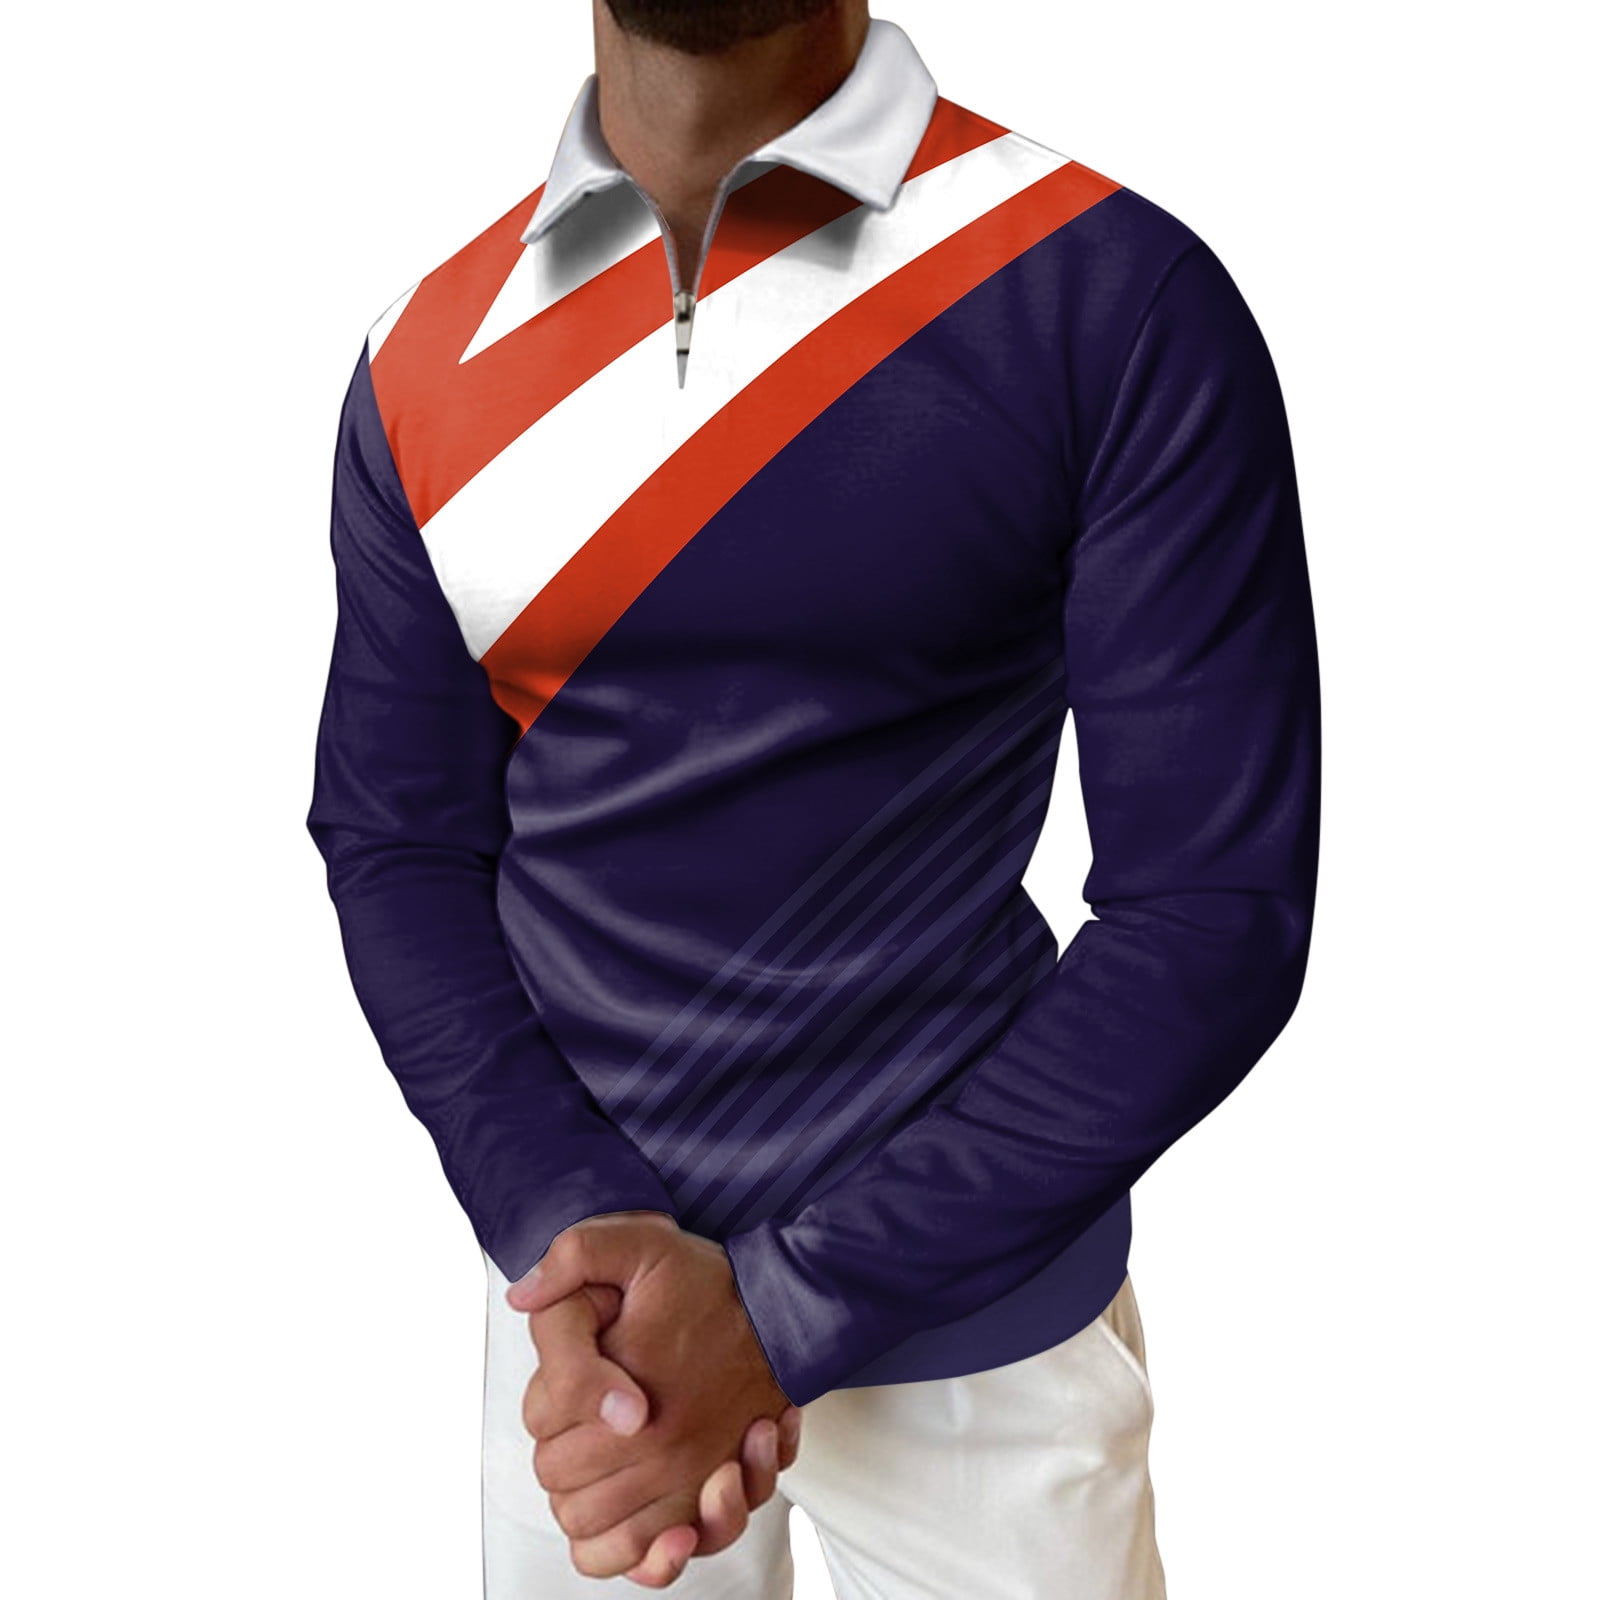 Louis Philippe Golf Blue Short Sleeve Polo Shirt Men Size L Regular Fi -  beyond exchange